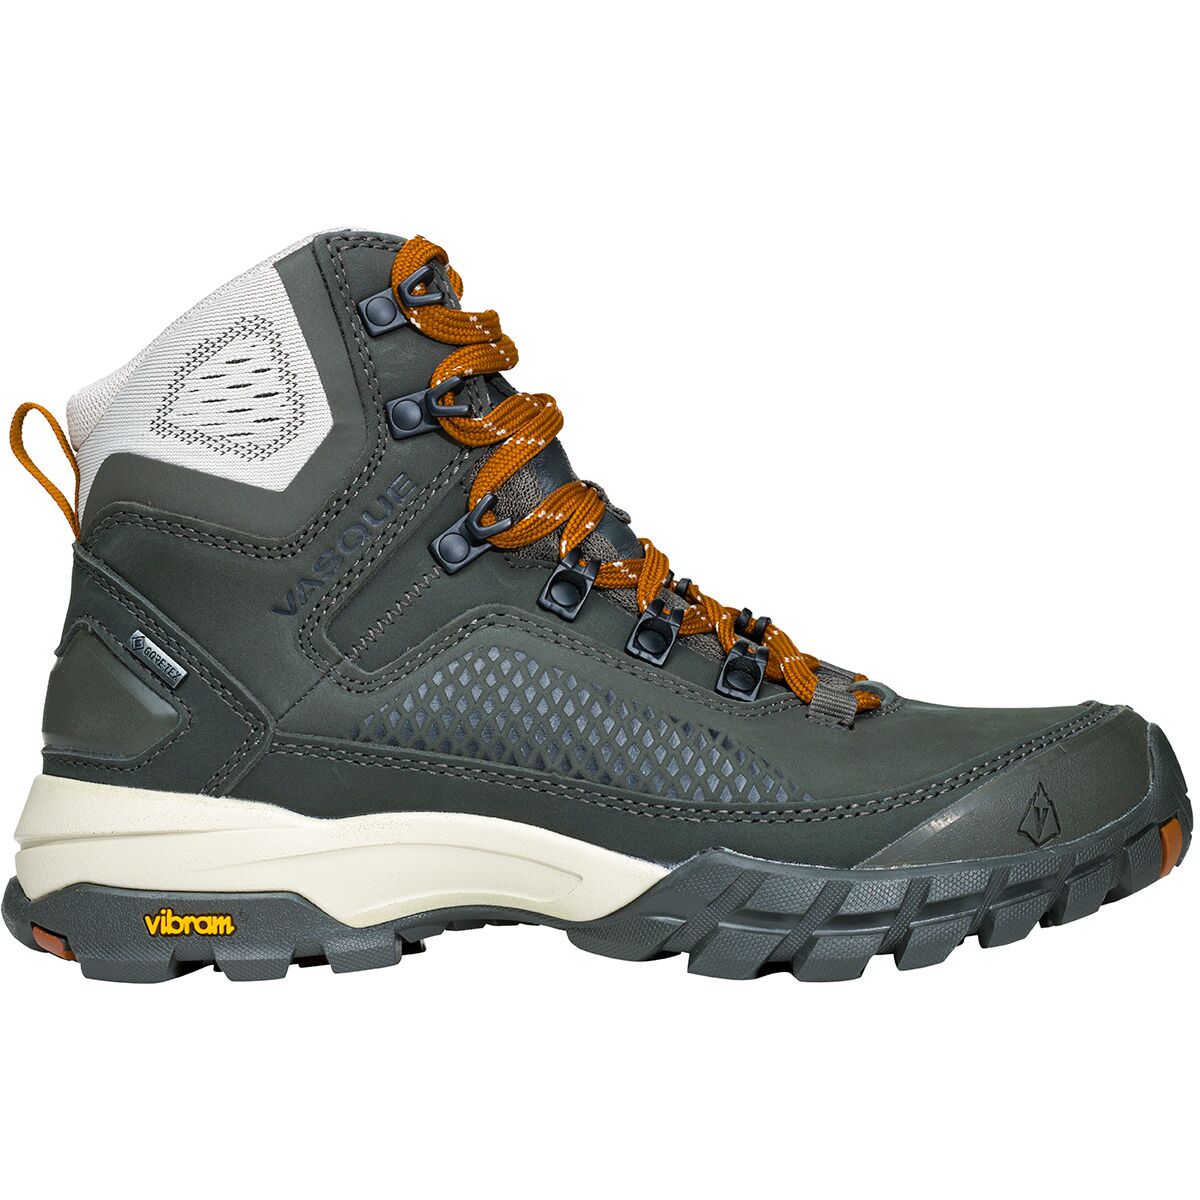 Vasque Talus XT GTX Hiking Boot - Women's - Footwear